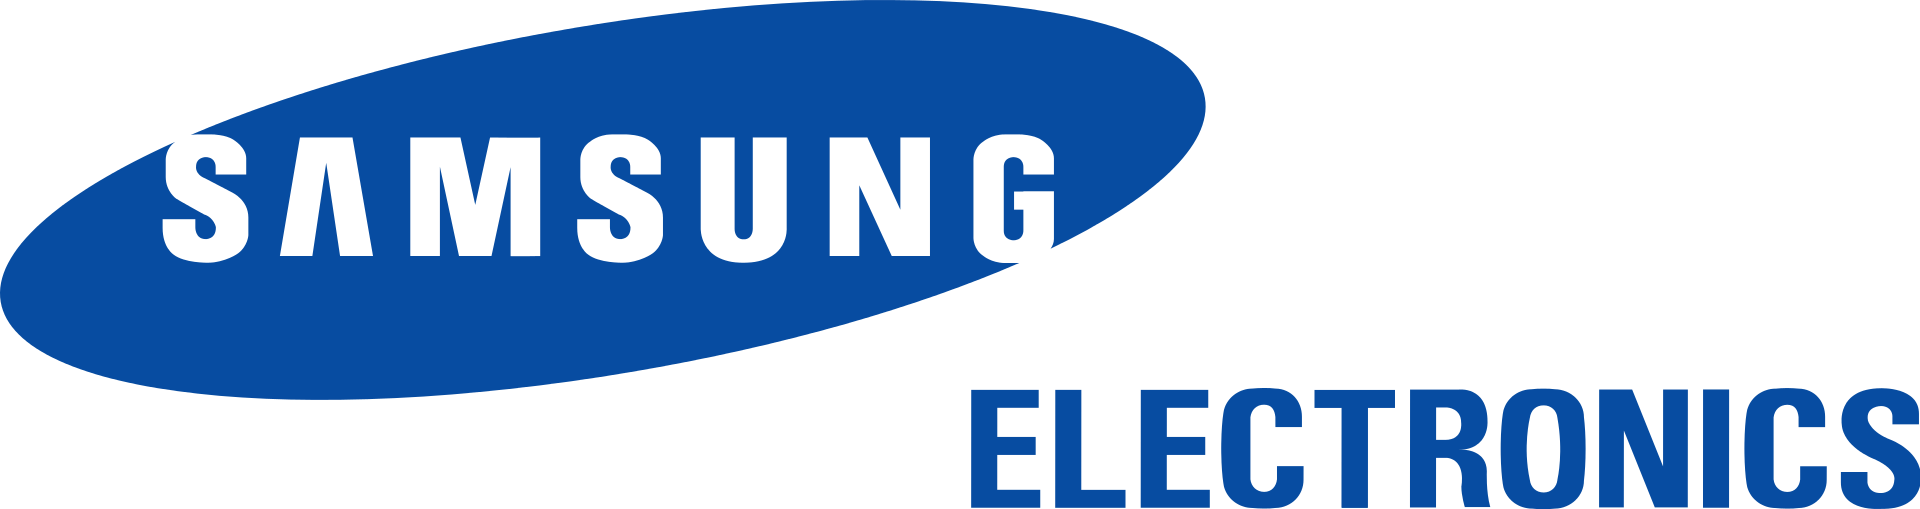 Samsung_Electronics_logo_(1993-2015).png